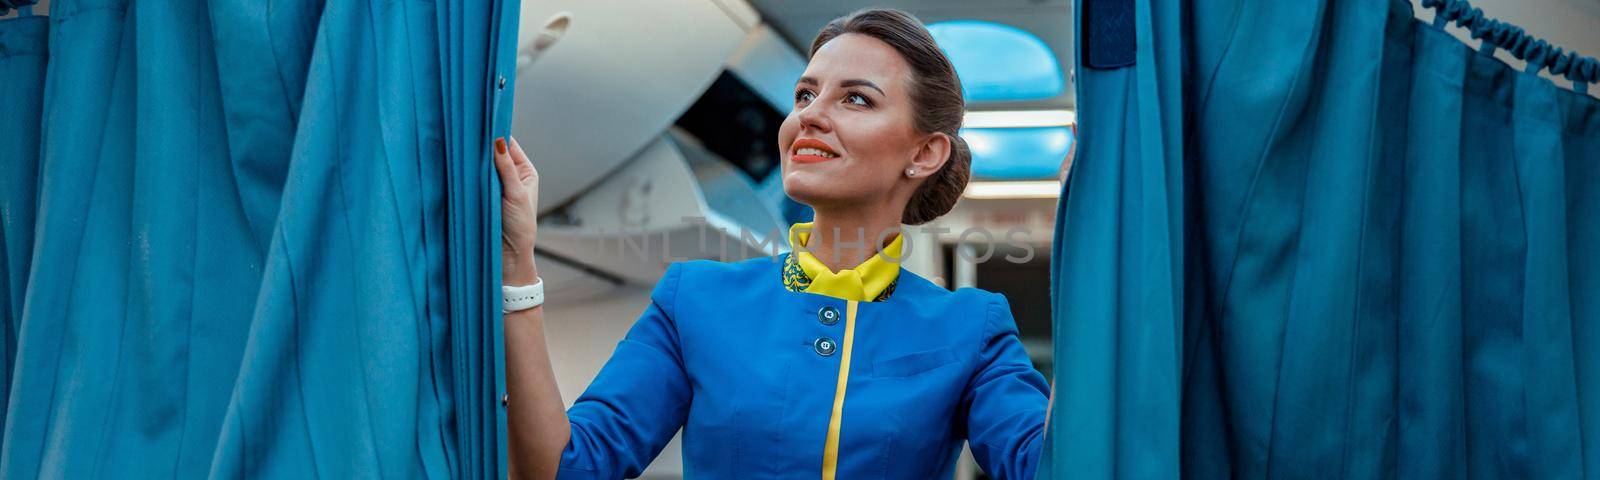 Joyful woman stewardess holding curtains in passenger aircraft by Yaroslav_astakhov